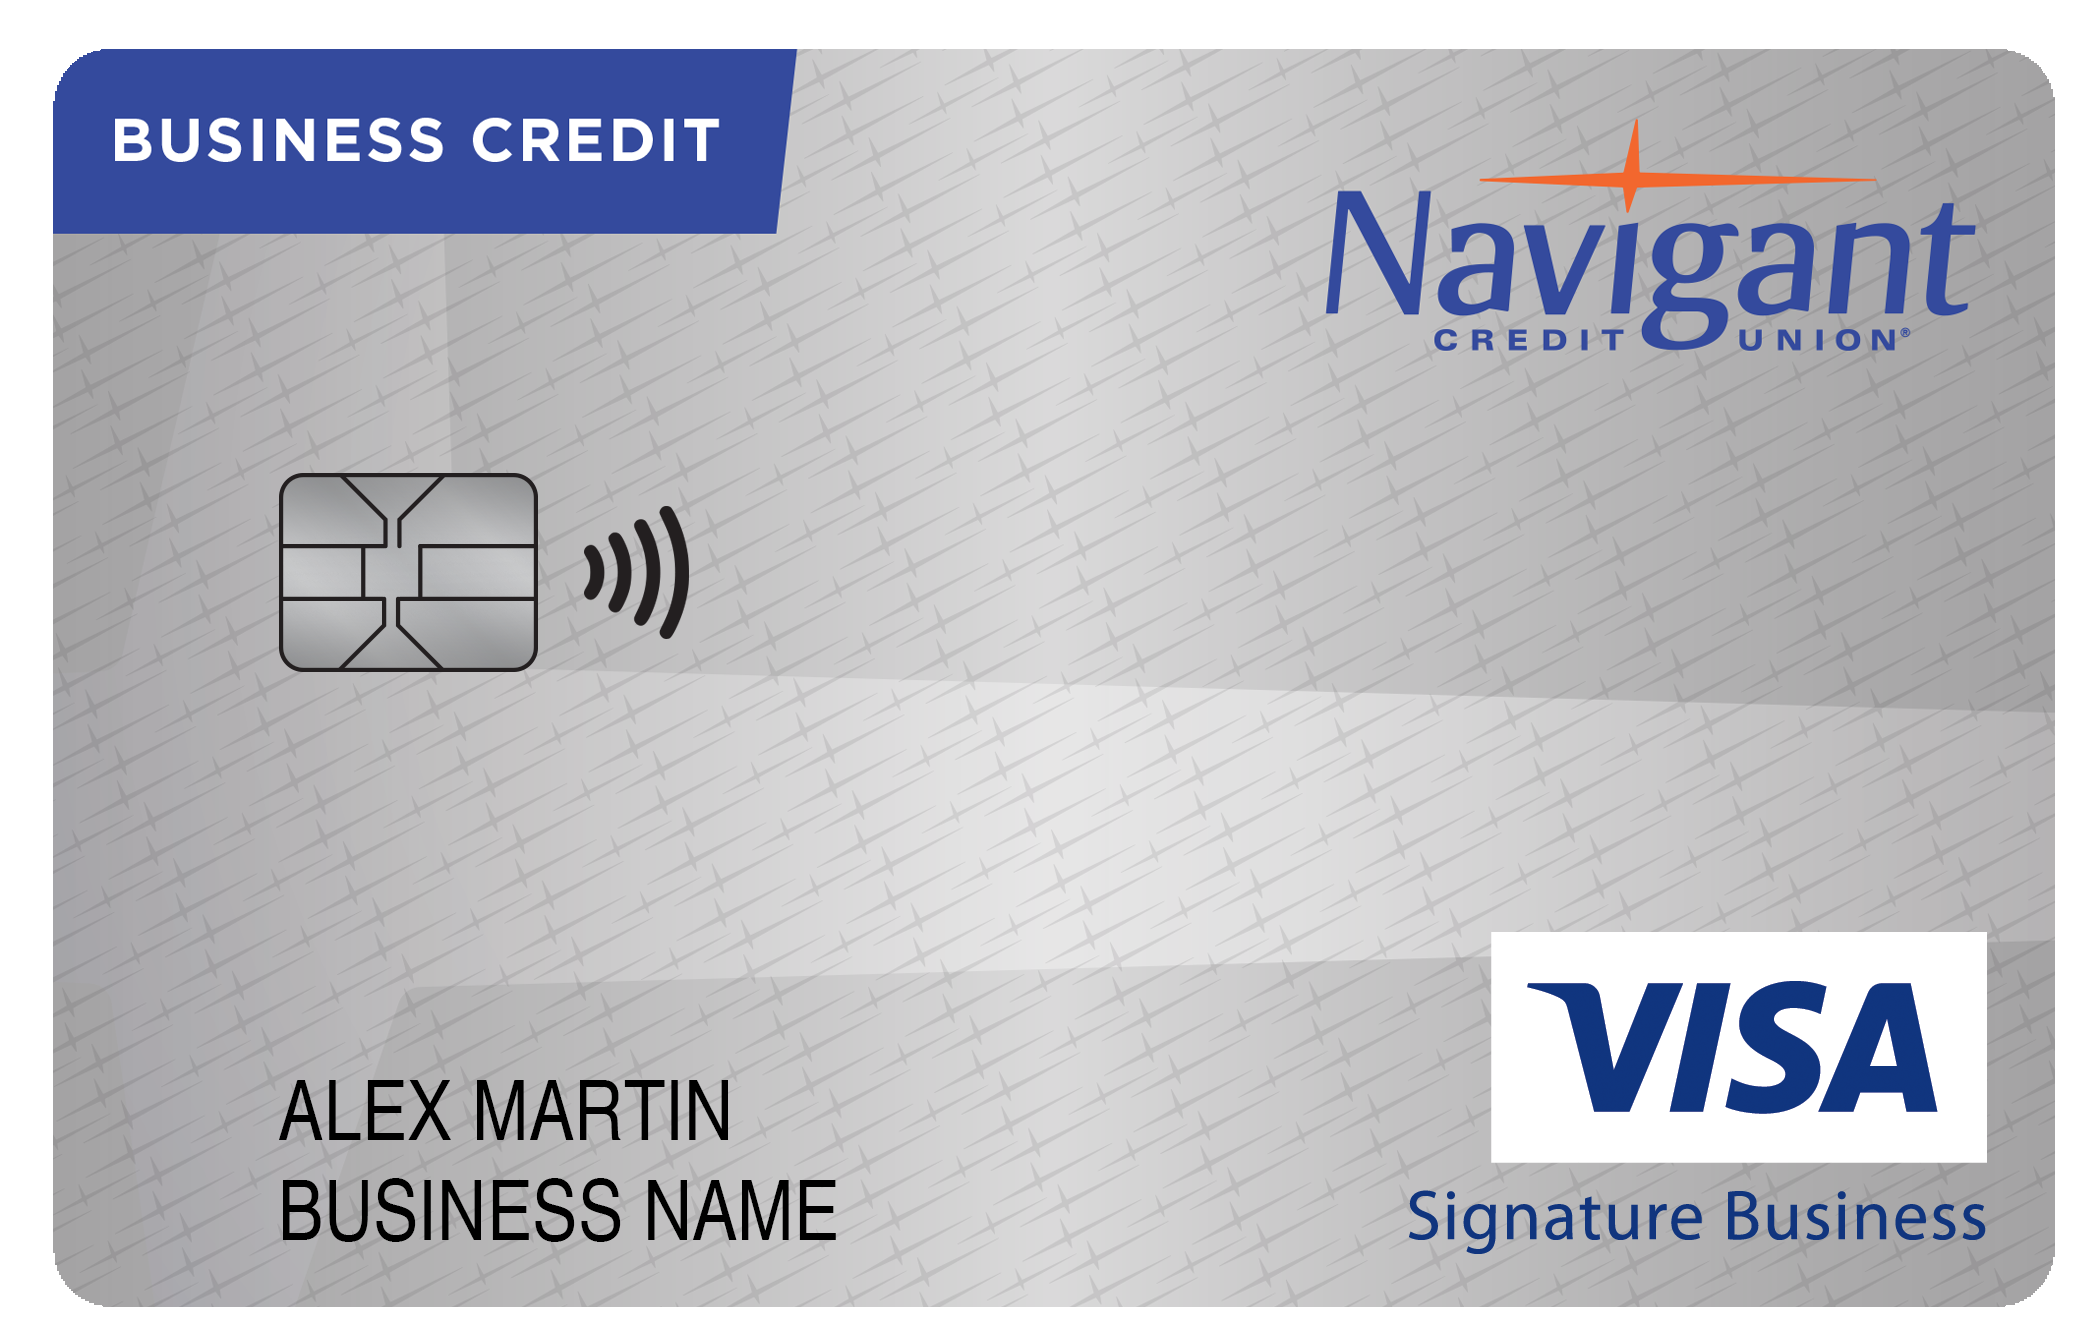 Navigant Credit Union Smart Business Rewards Card